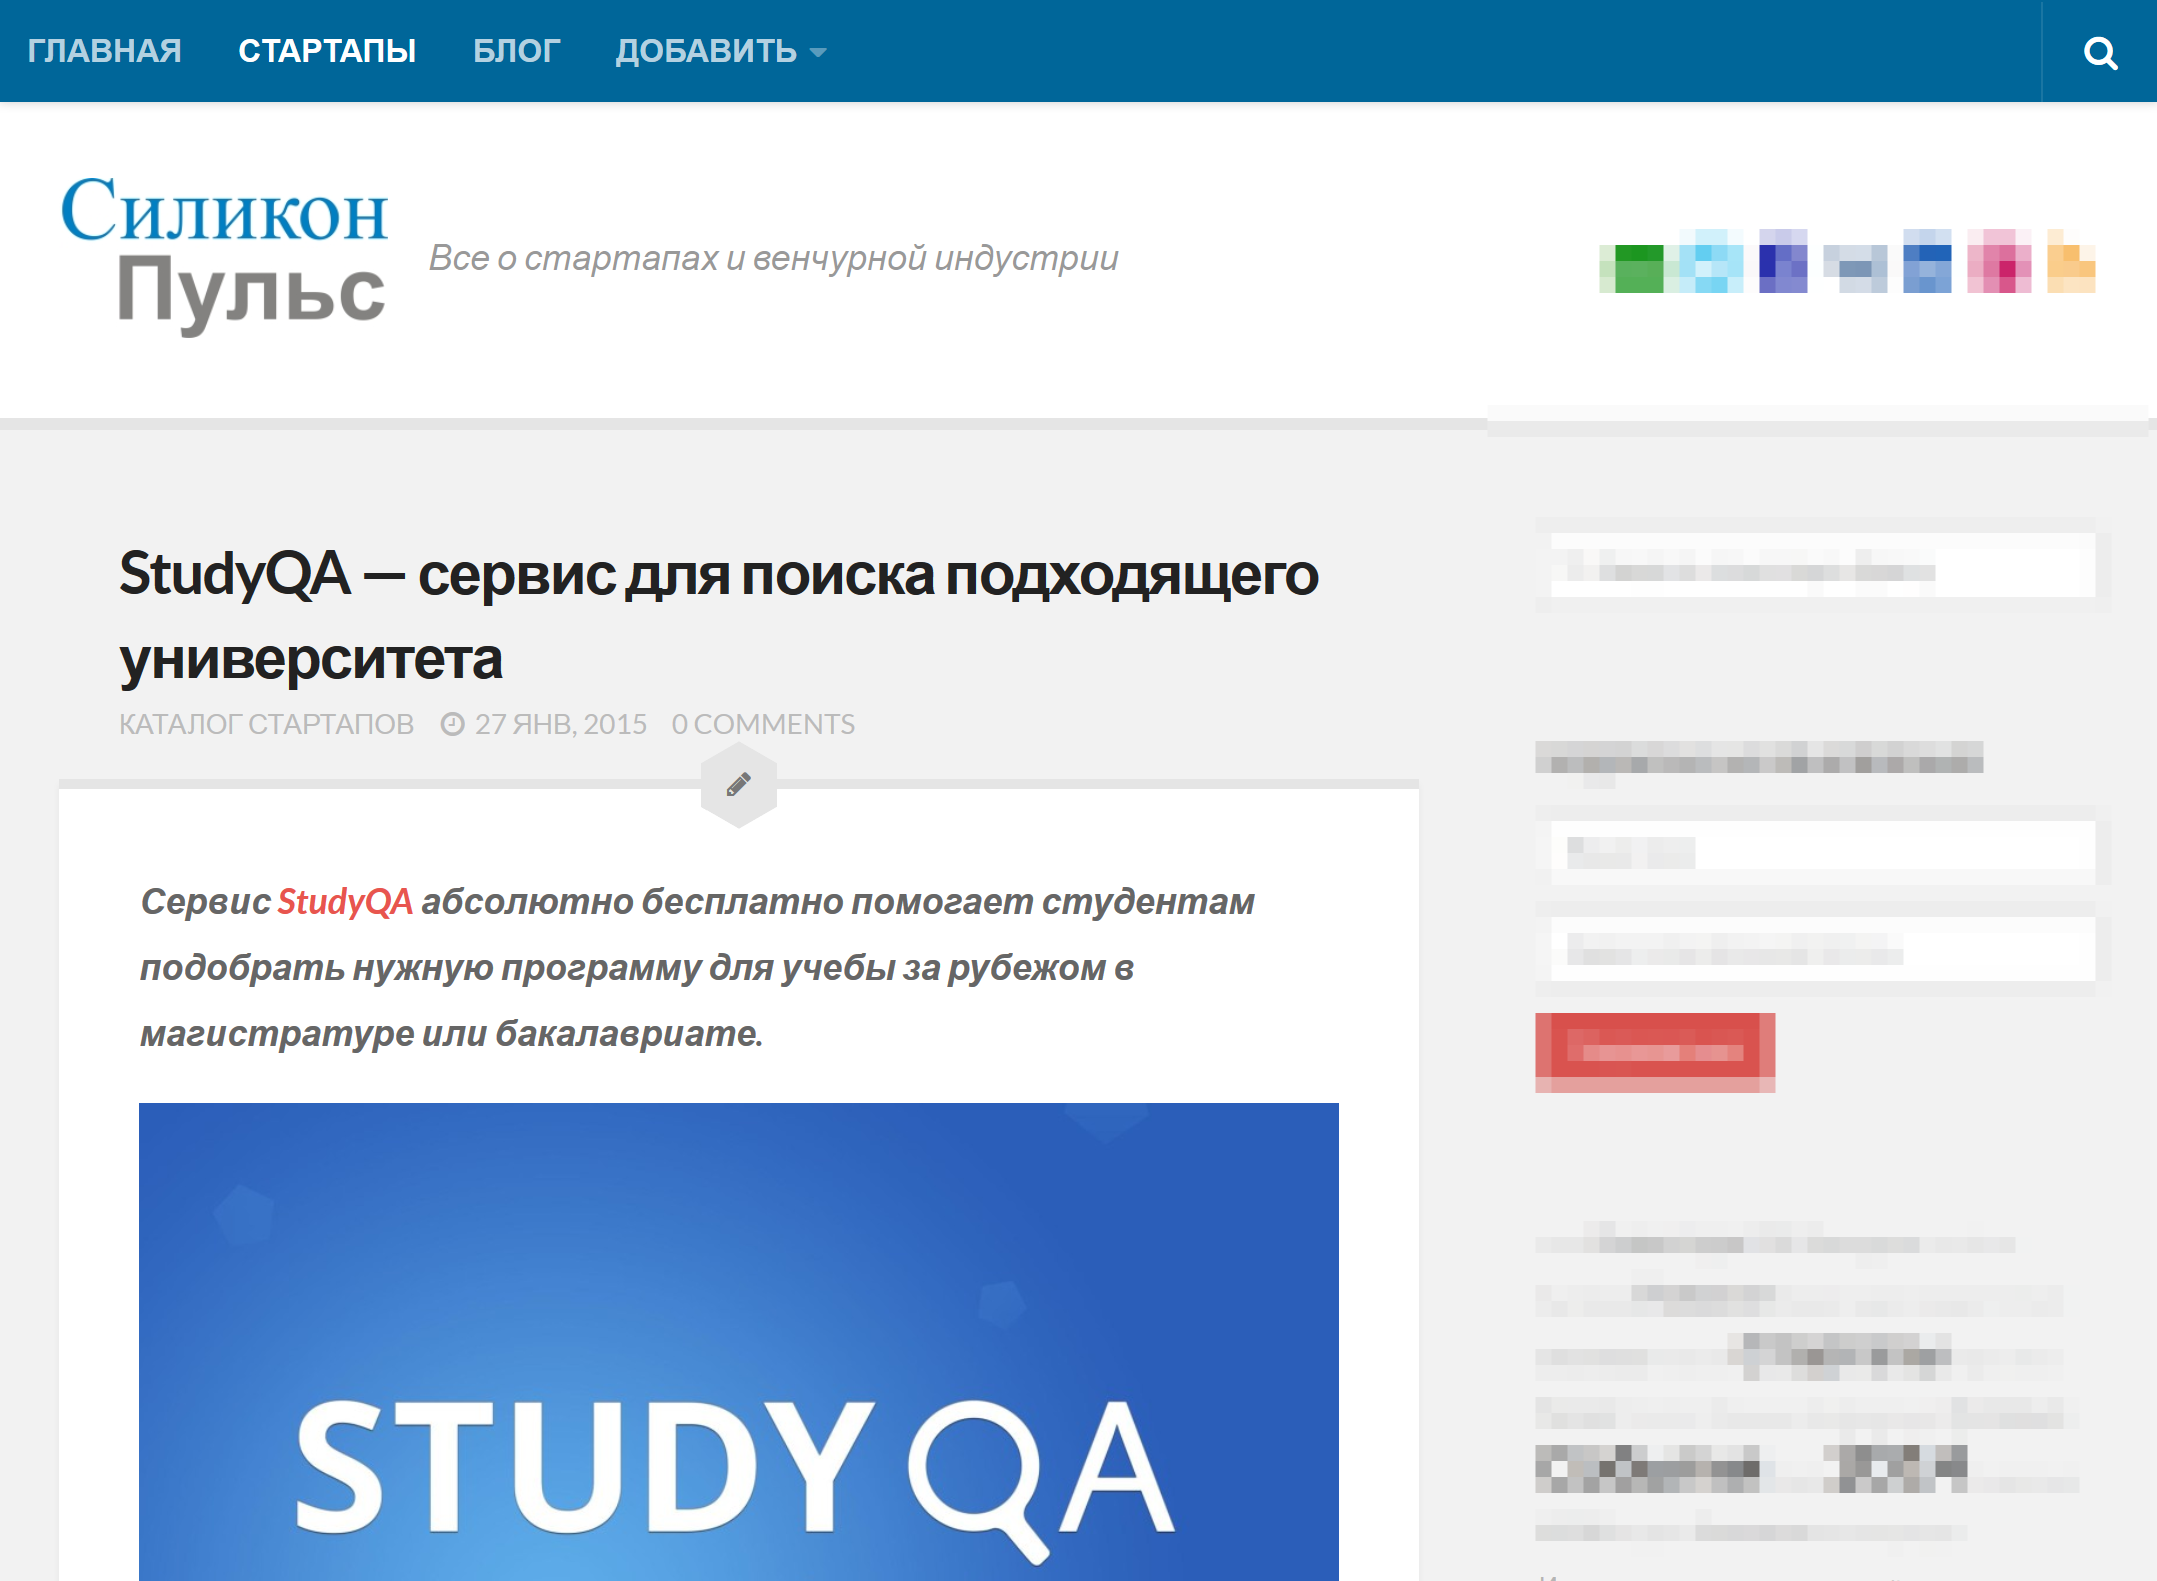 StudyQA — сервис для поиска подходящего университета